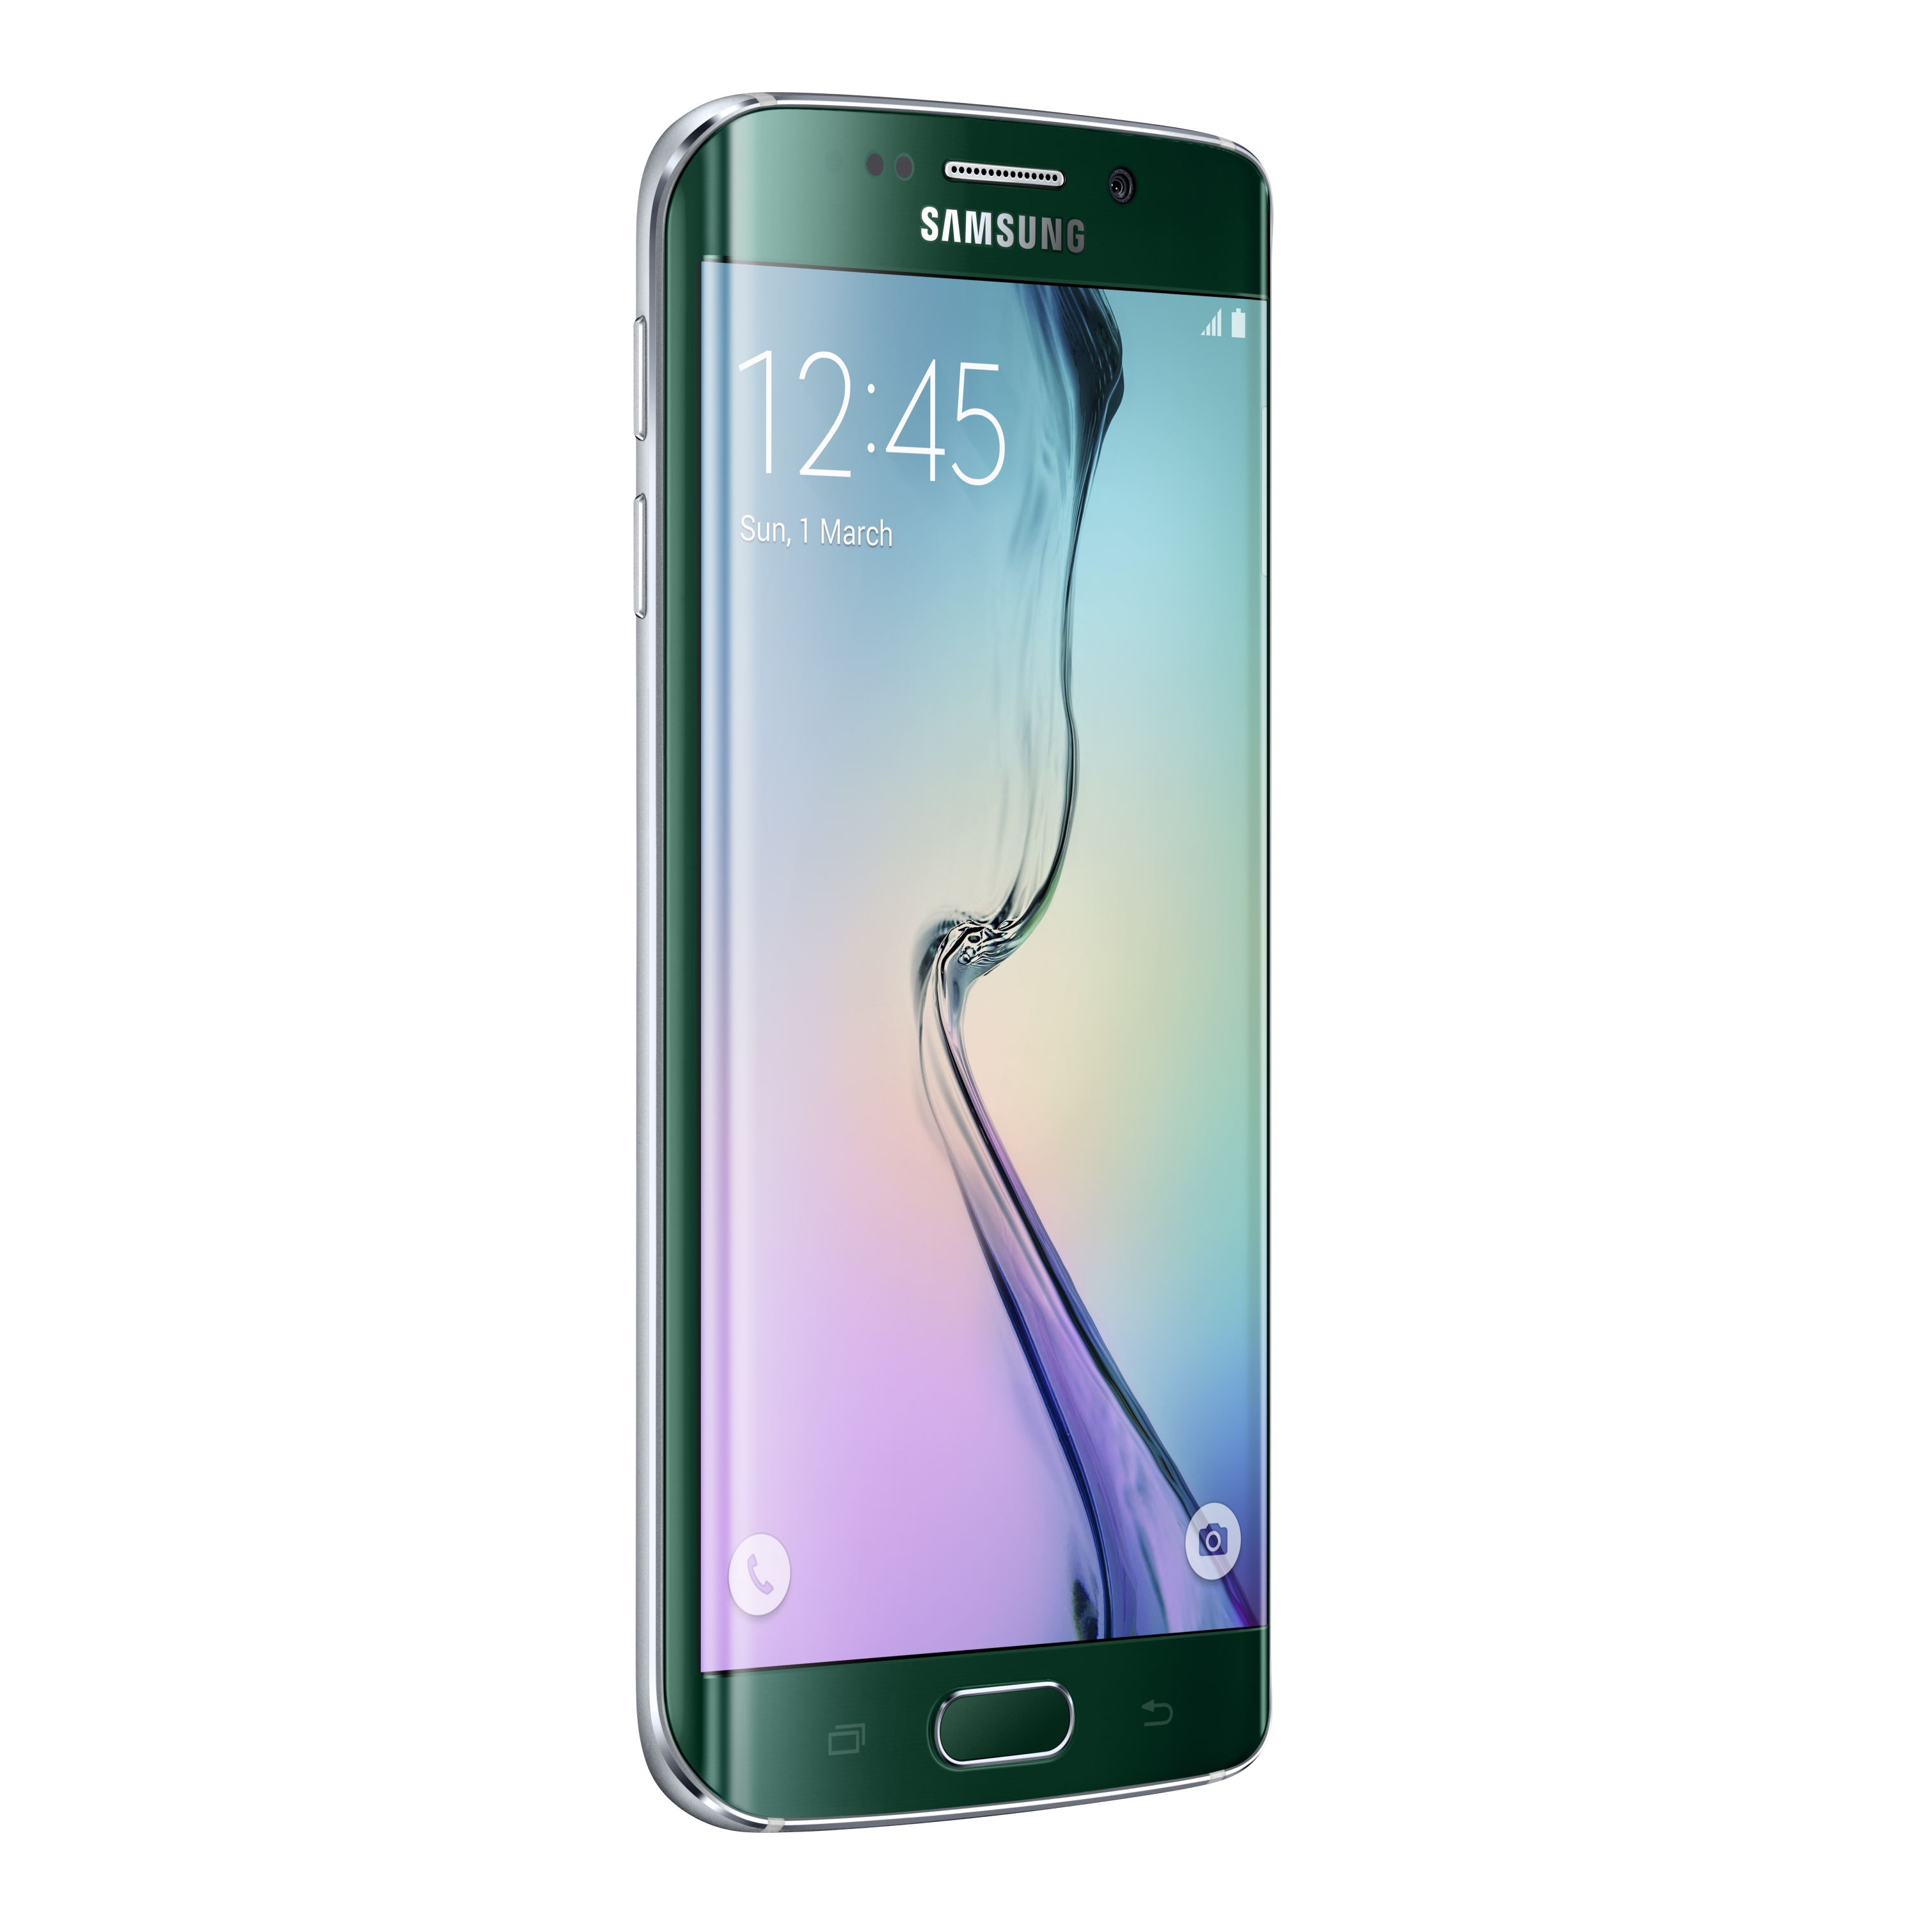 Телефоны самсунг цены спб. Samsung g925f Galaxy s6 Edge. Samsung Galaxy (SM-g925) s6 Edge. Samsung Galaxy s6 Edge 128gb. Samsung Galaxy s6 Edge 64gb.